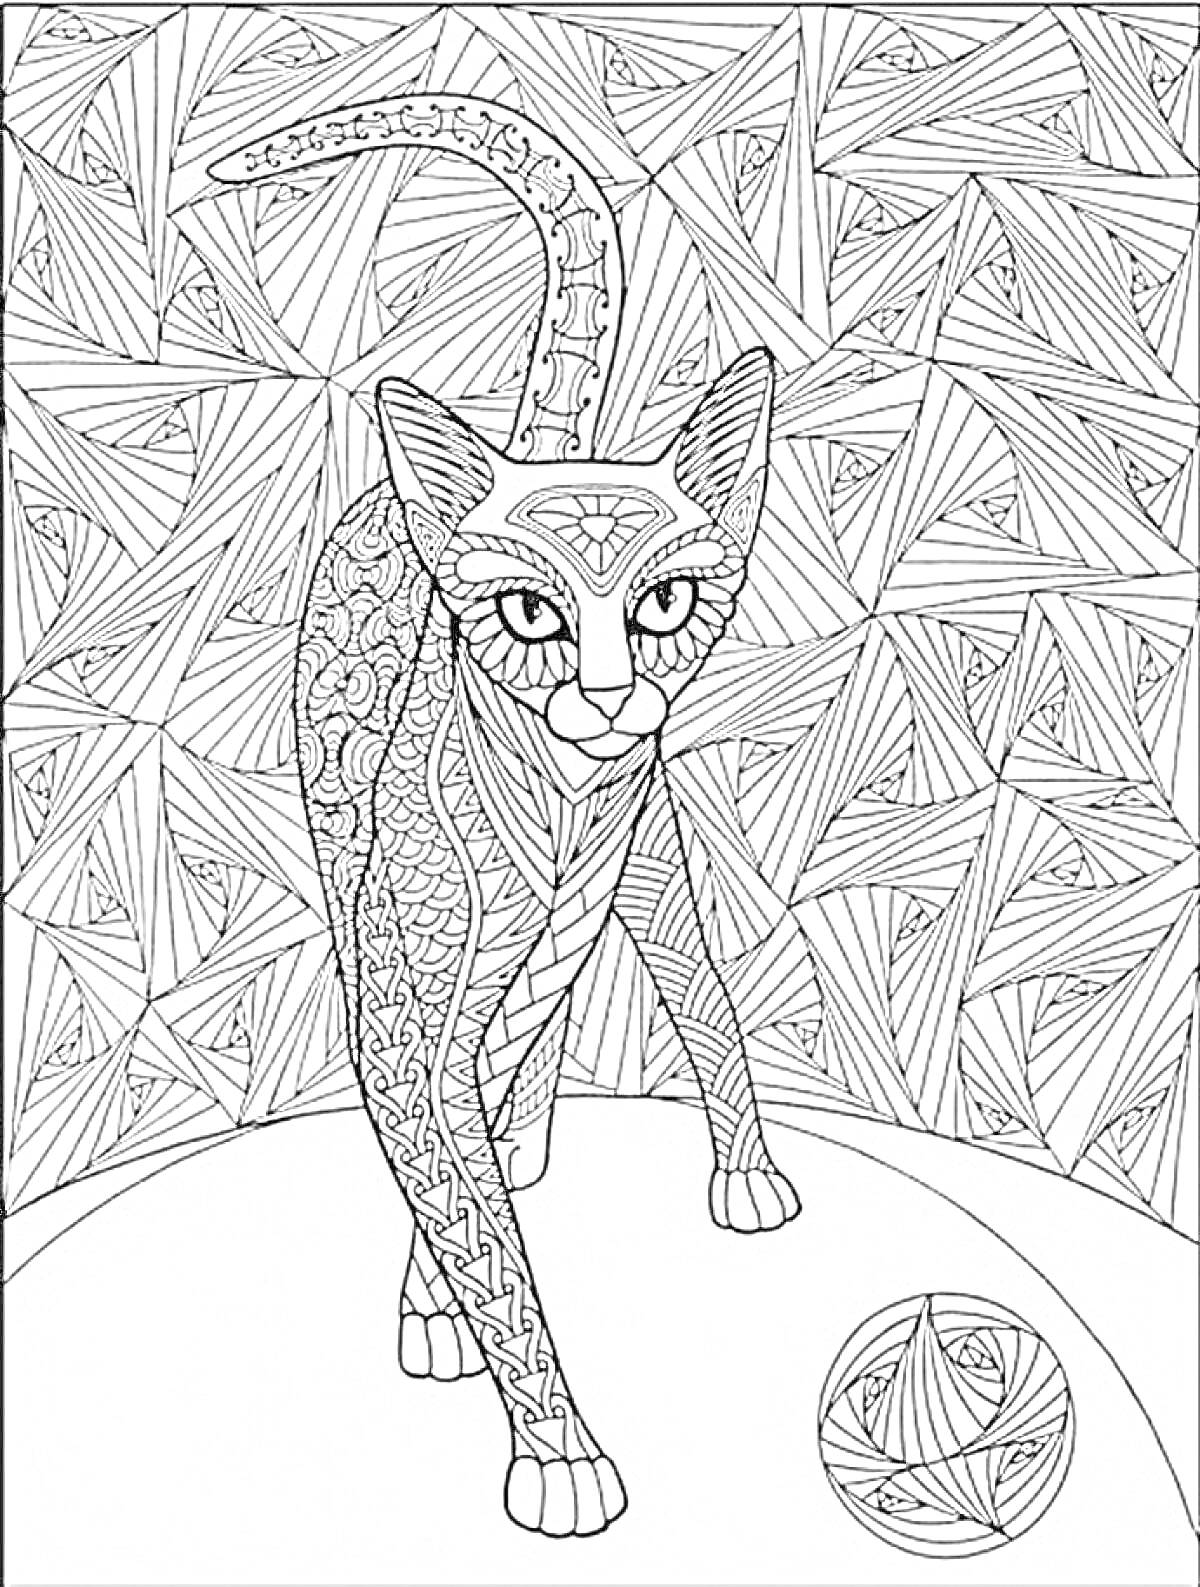 Кошка с мячом на фоне абстрактного узора